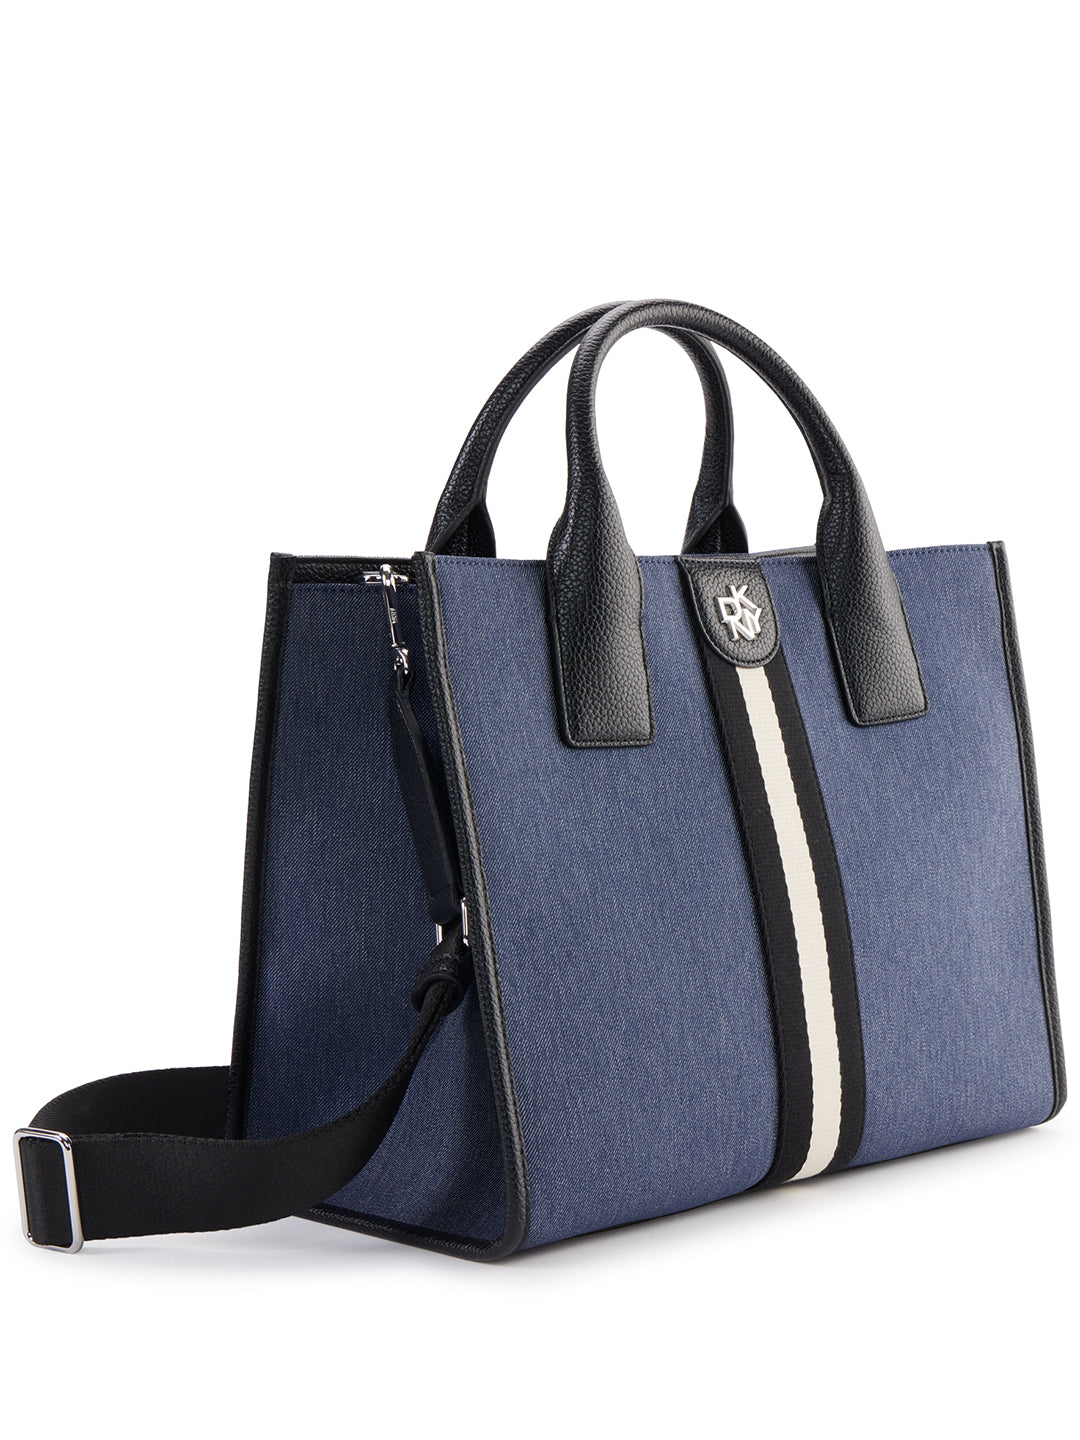 DKNY Women Blue Printed Handbag